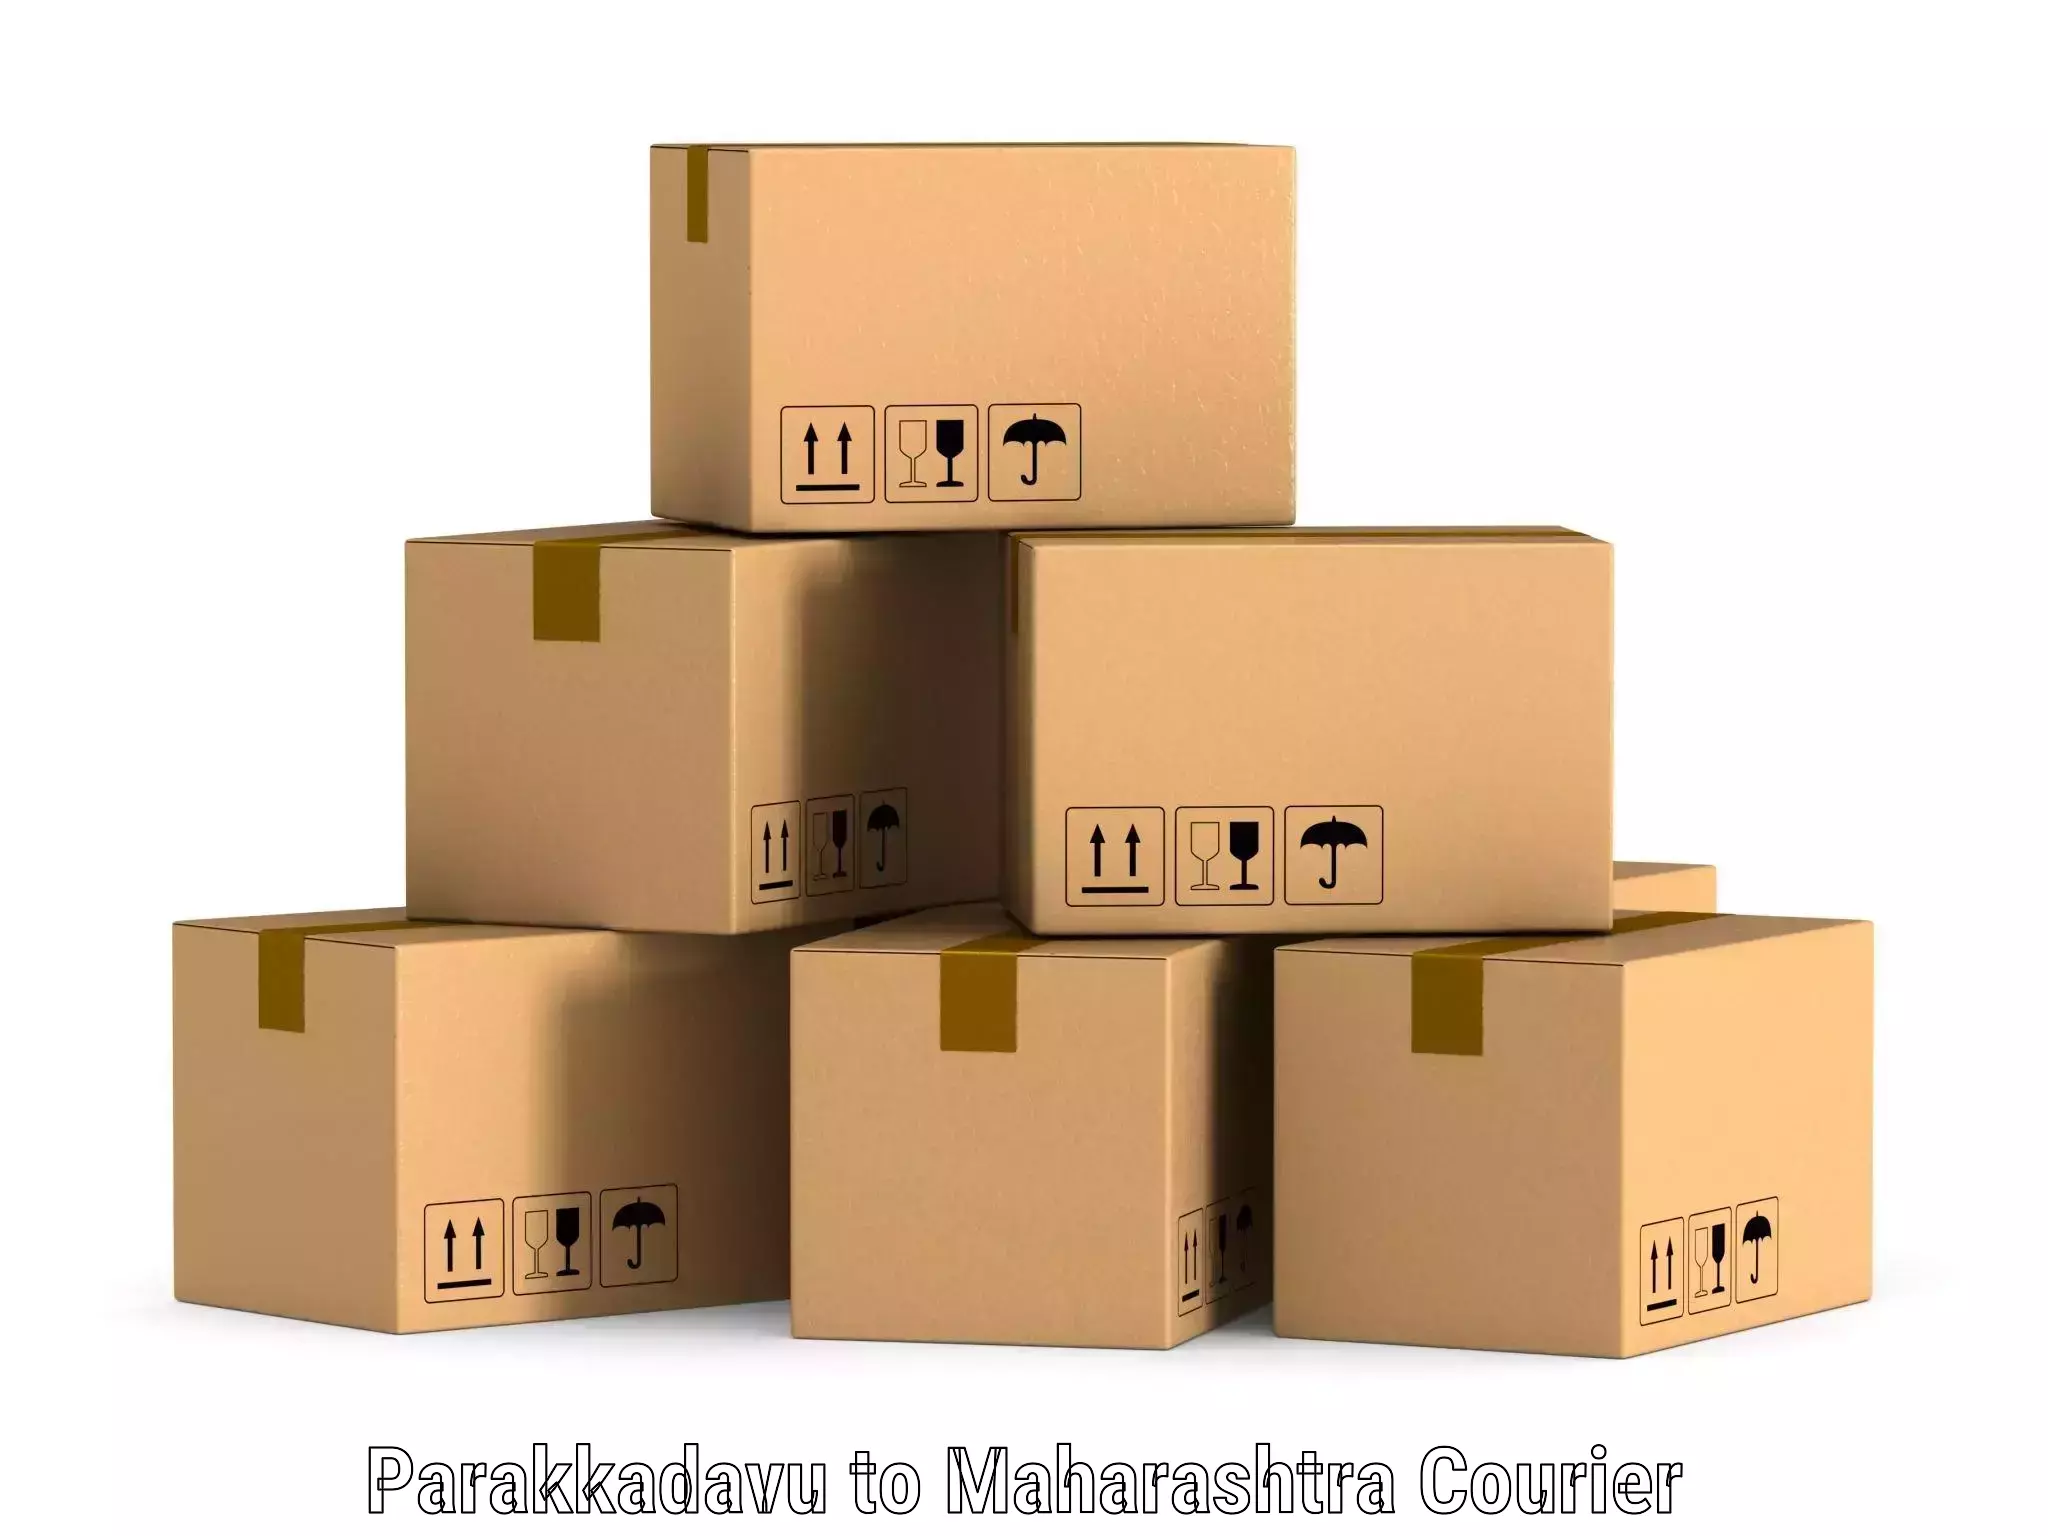 Same-day delivery solutions Parakkadavu to Mumbai Port